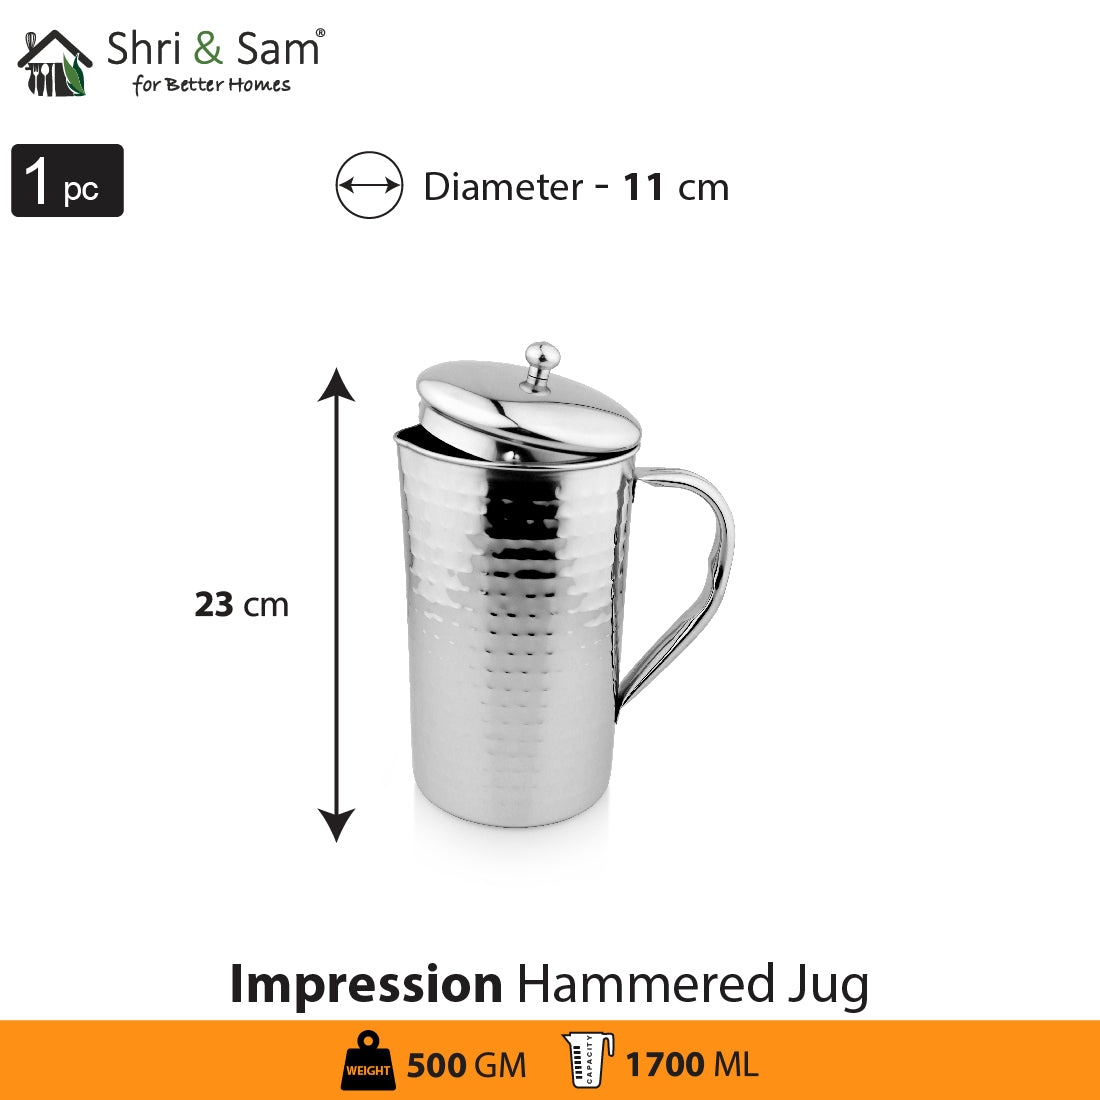 Stainless Steel 1700 ML Hammered Jug Impression